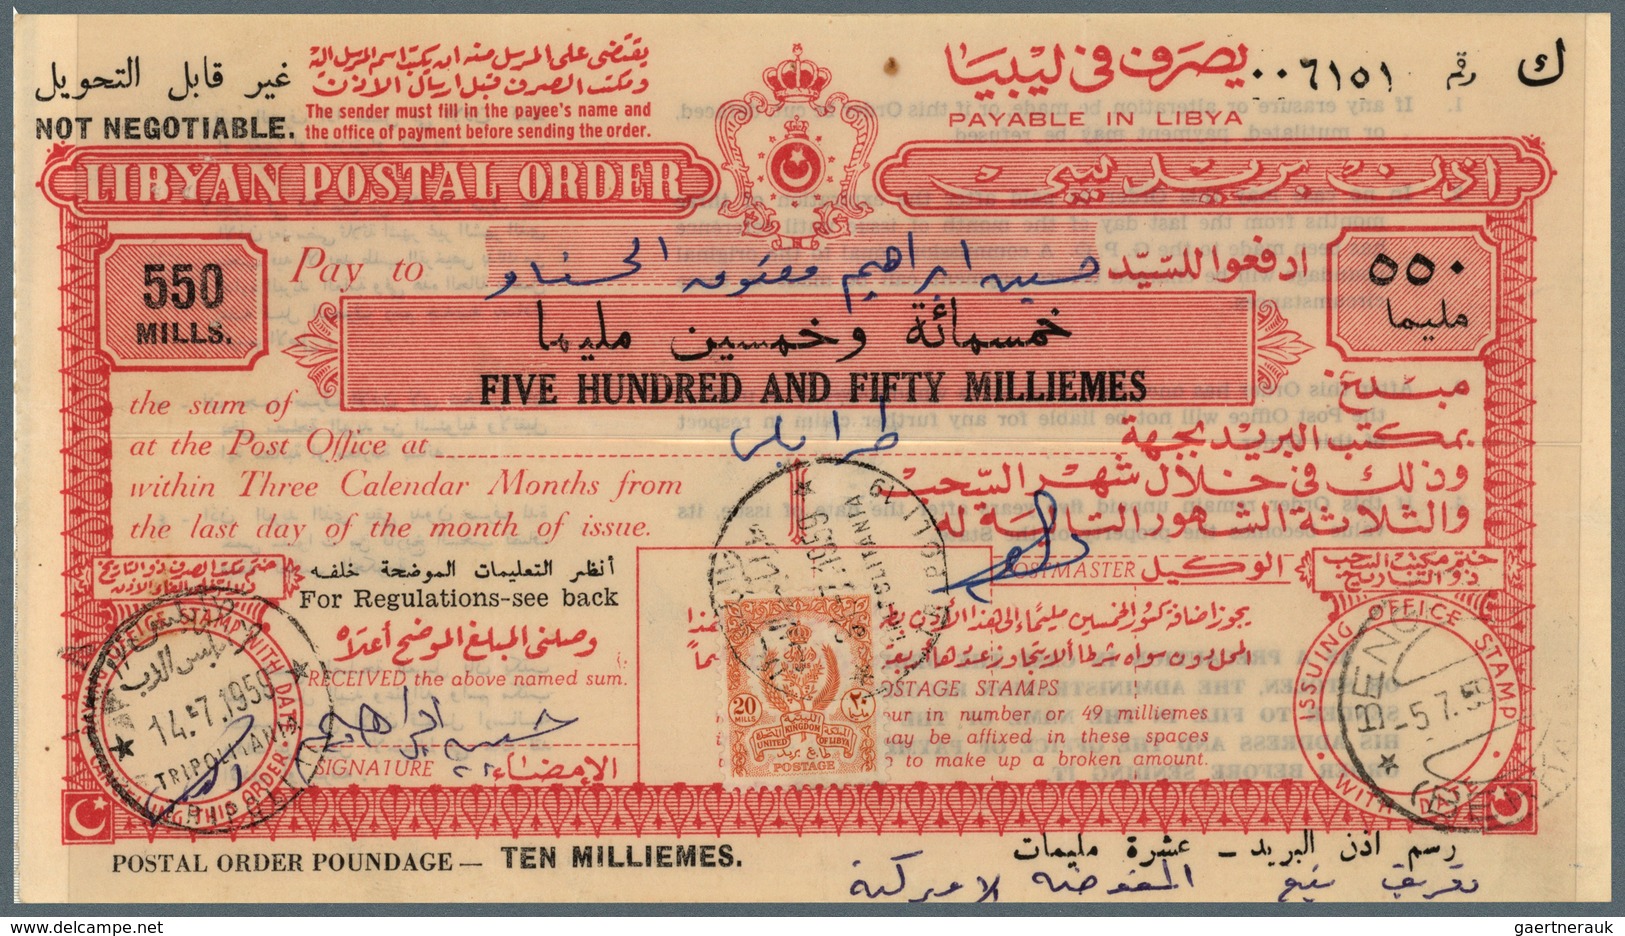 Libyen: 1957 - 1959, wonderful lot of Libyan postal stationerys - Postal Orders - from 100 milliemès